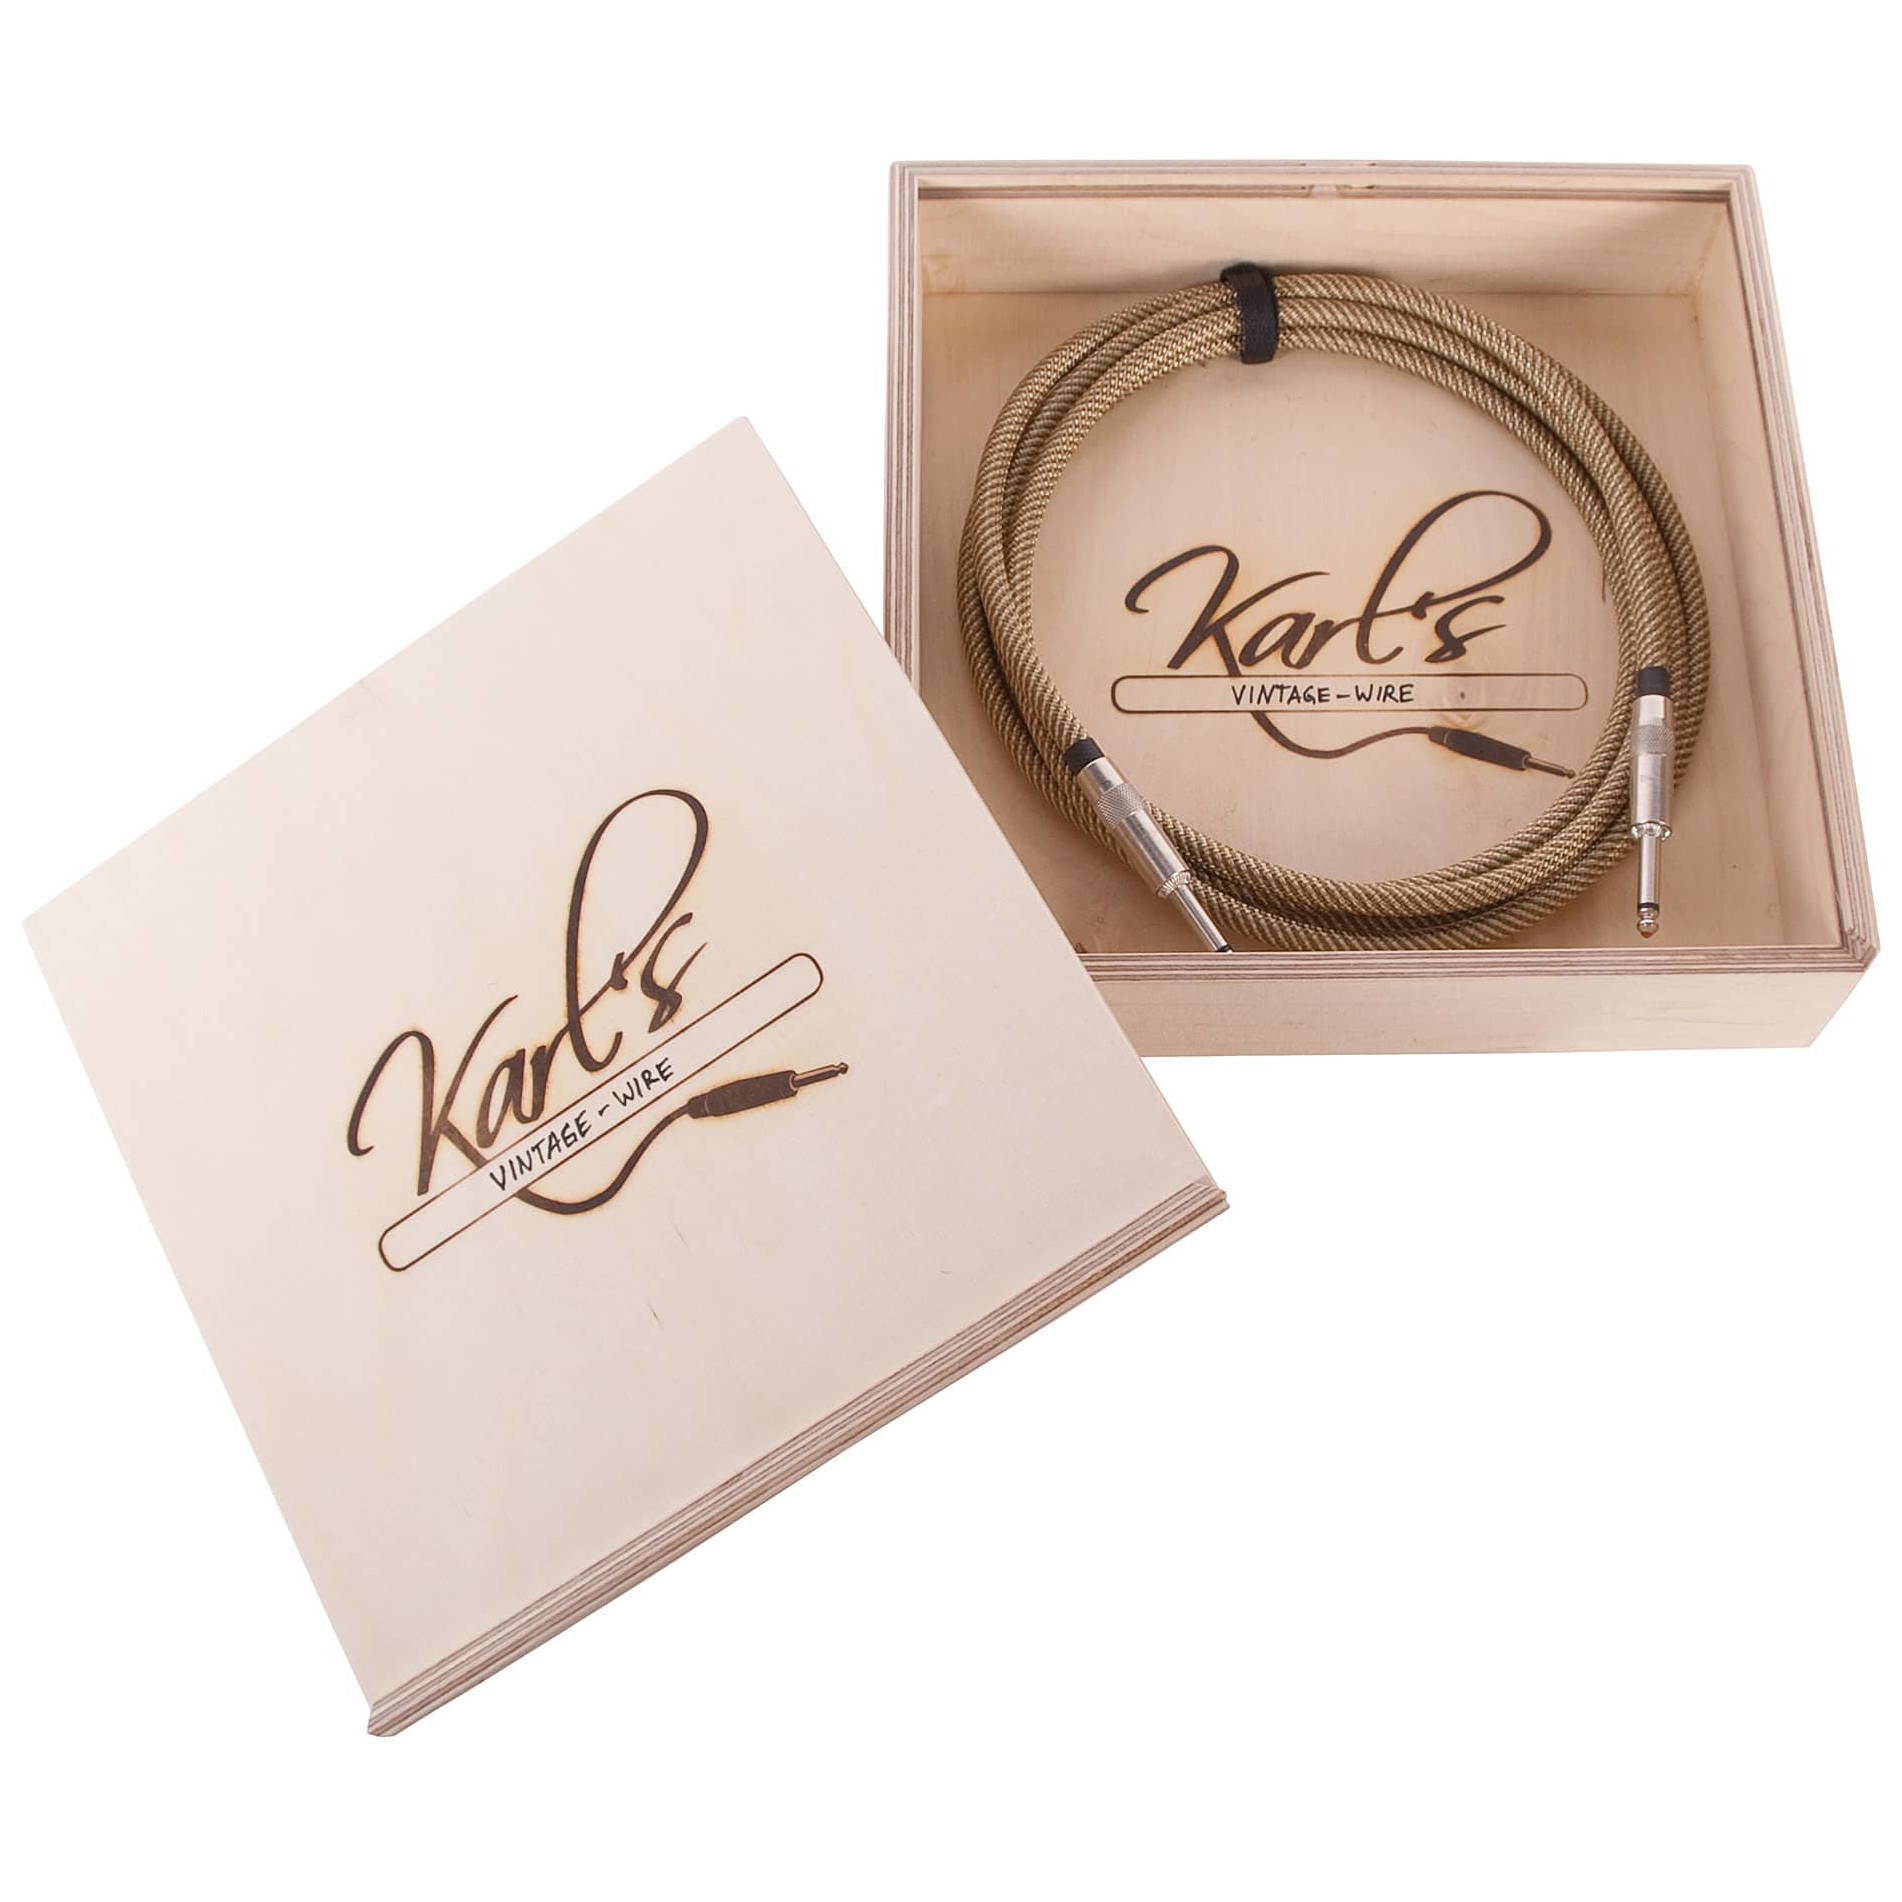 Karl’s Vintage-Wire 3m K/K